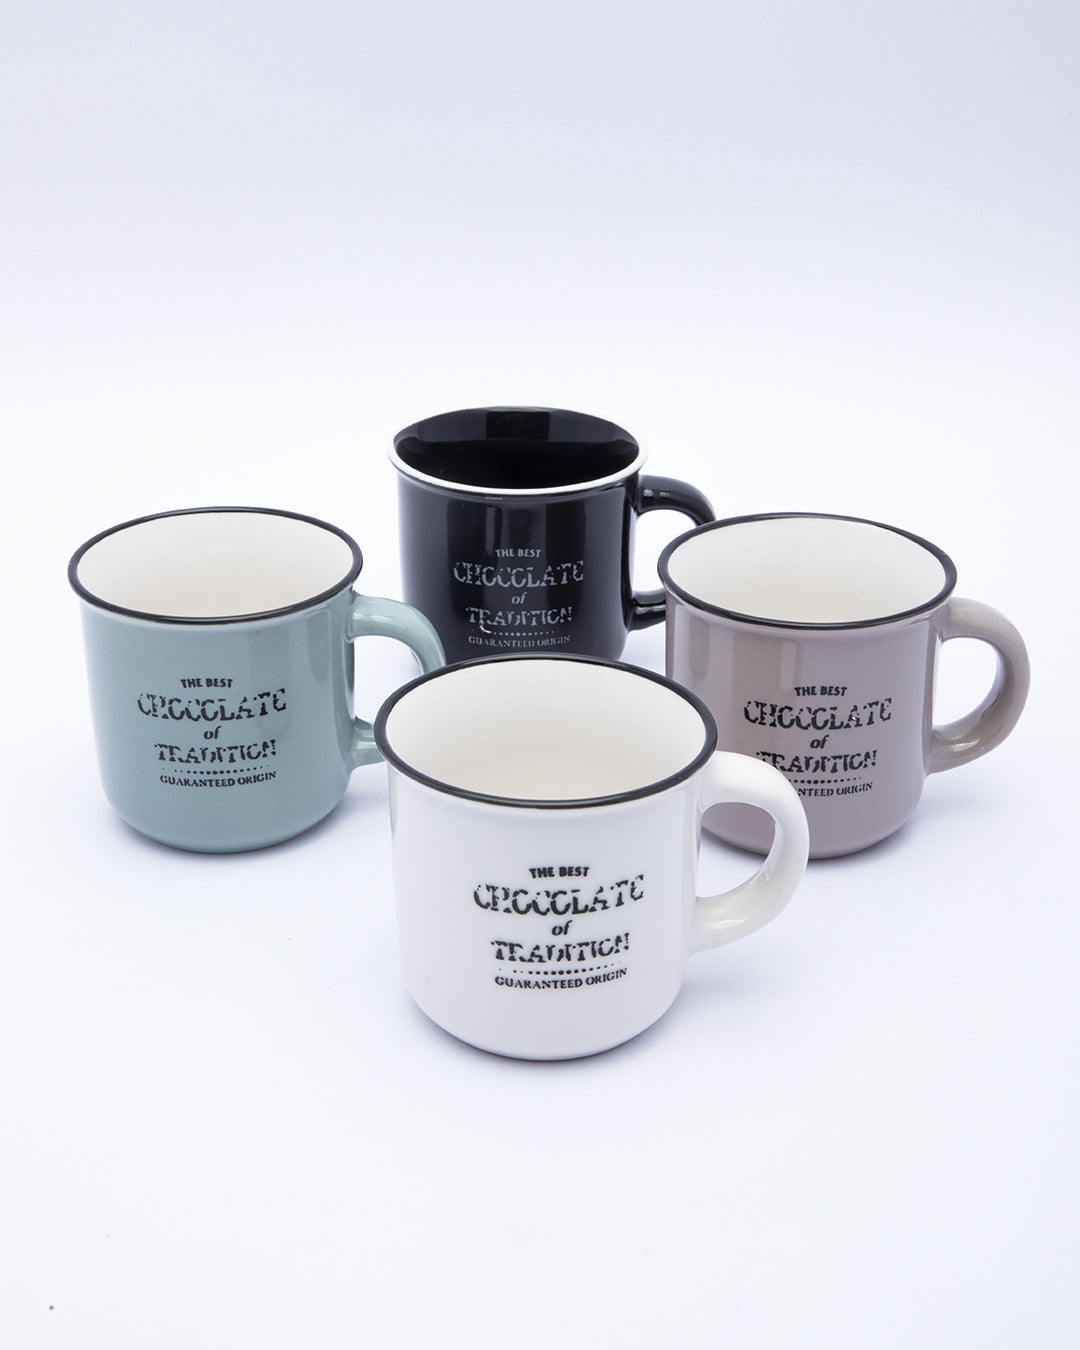 VON CASA Espresso Mugs, Tea & Coffee Mugs, Dishwasher & Microwave Safe, Assorted Colours, Ceramic, Set of 4, 140 mL